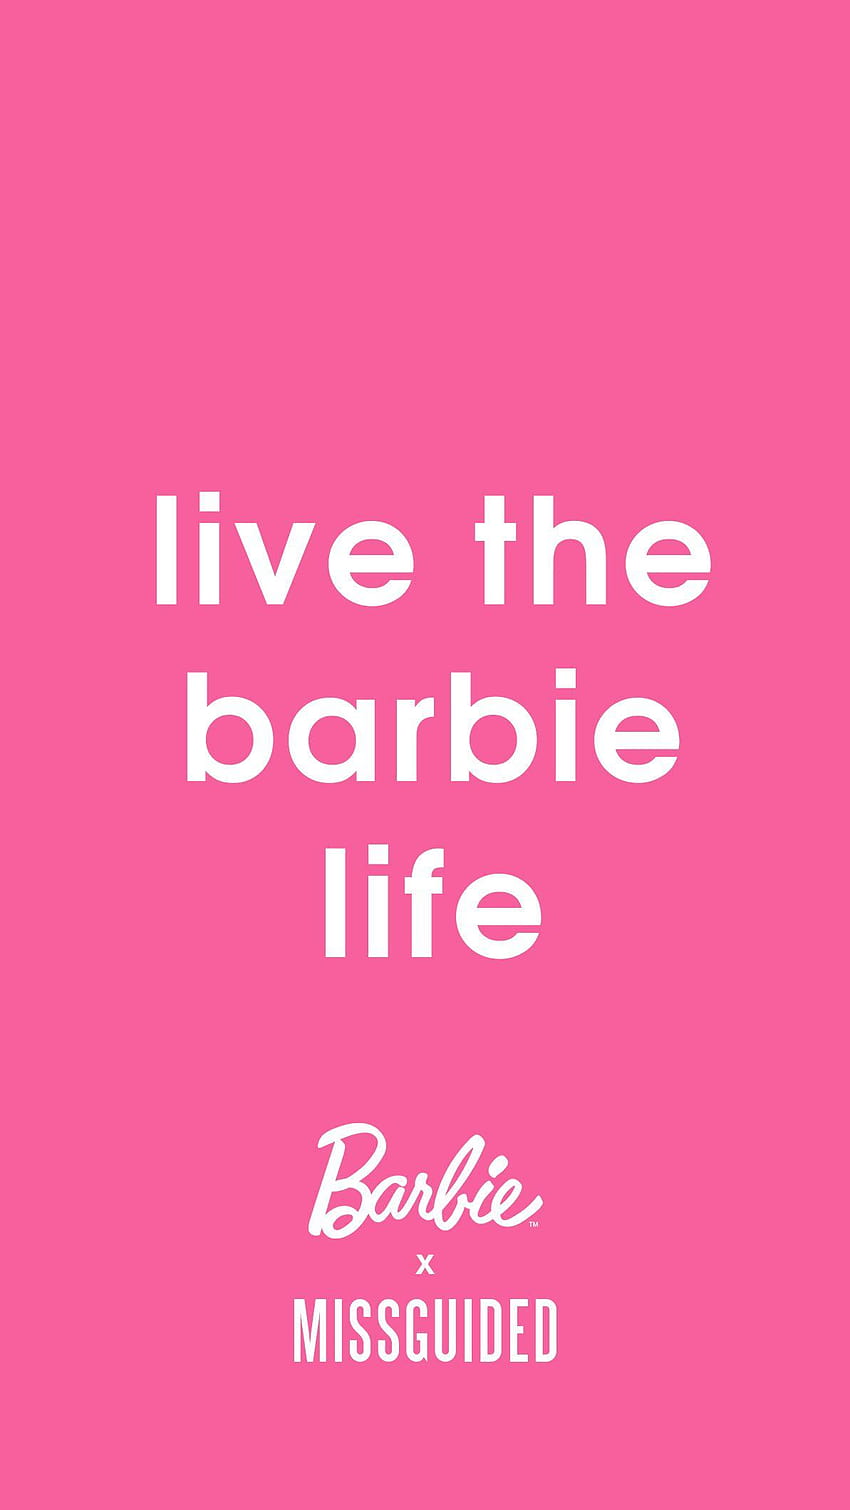 Be Like Barbie, rosa barbie fondo de pantalla del teléfono